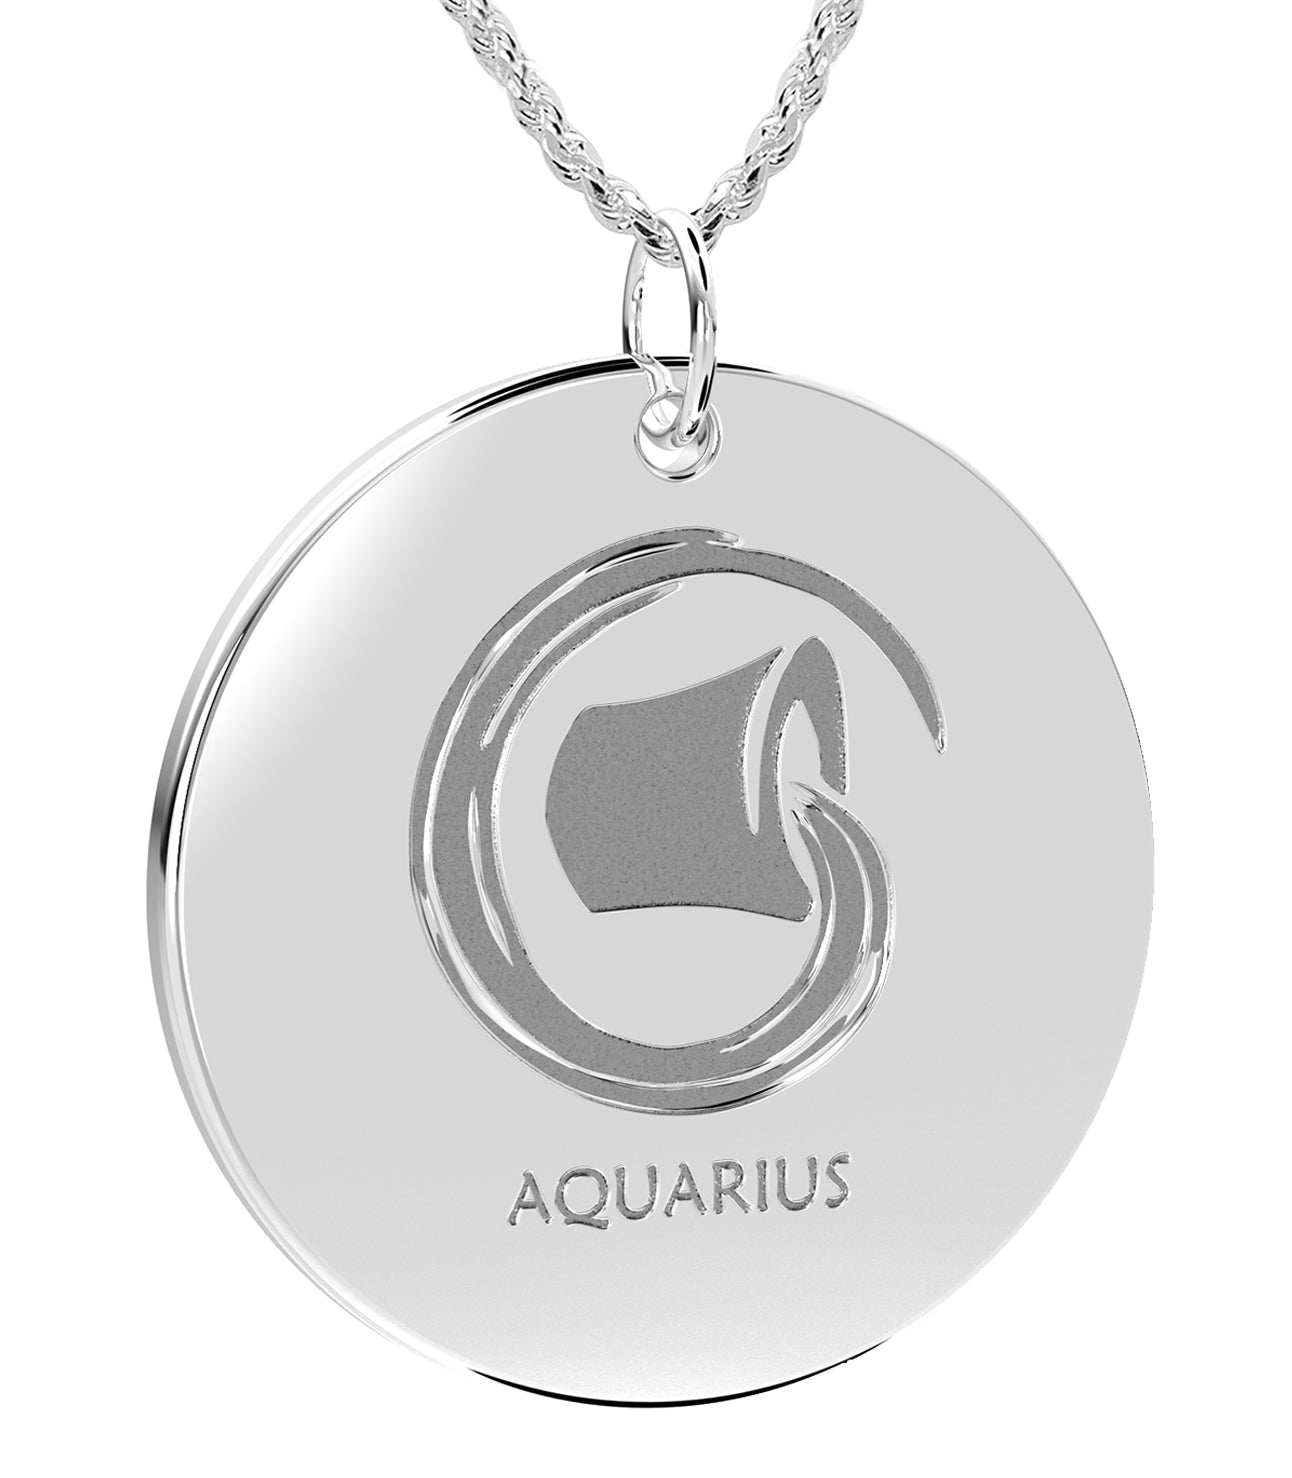 Aquarius Necklace - Zodiac Necklace In Round For Men